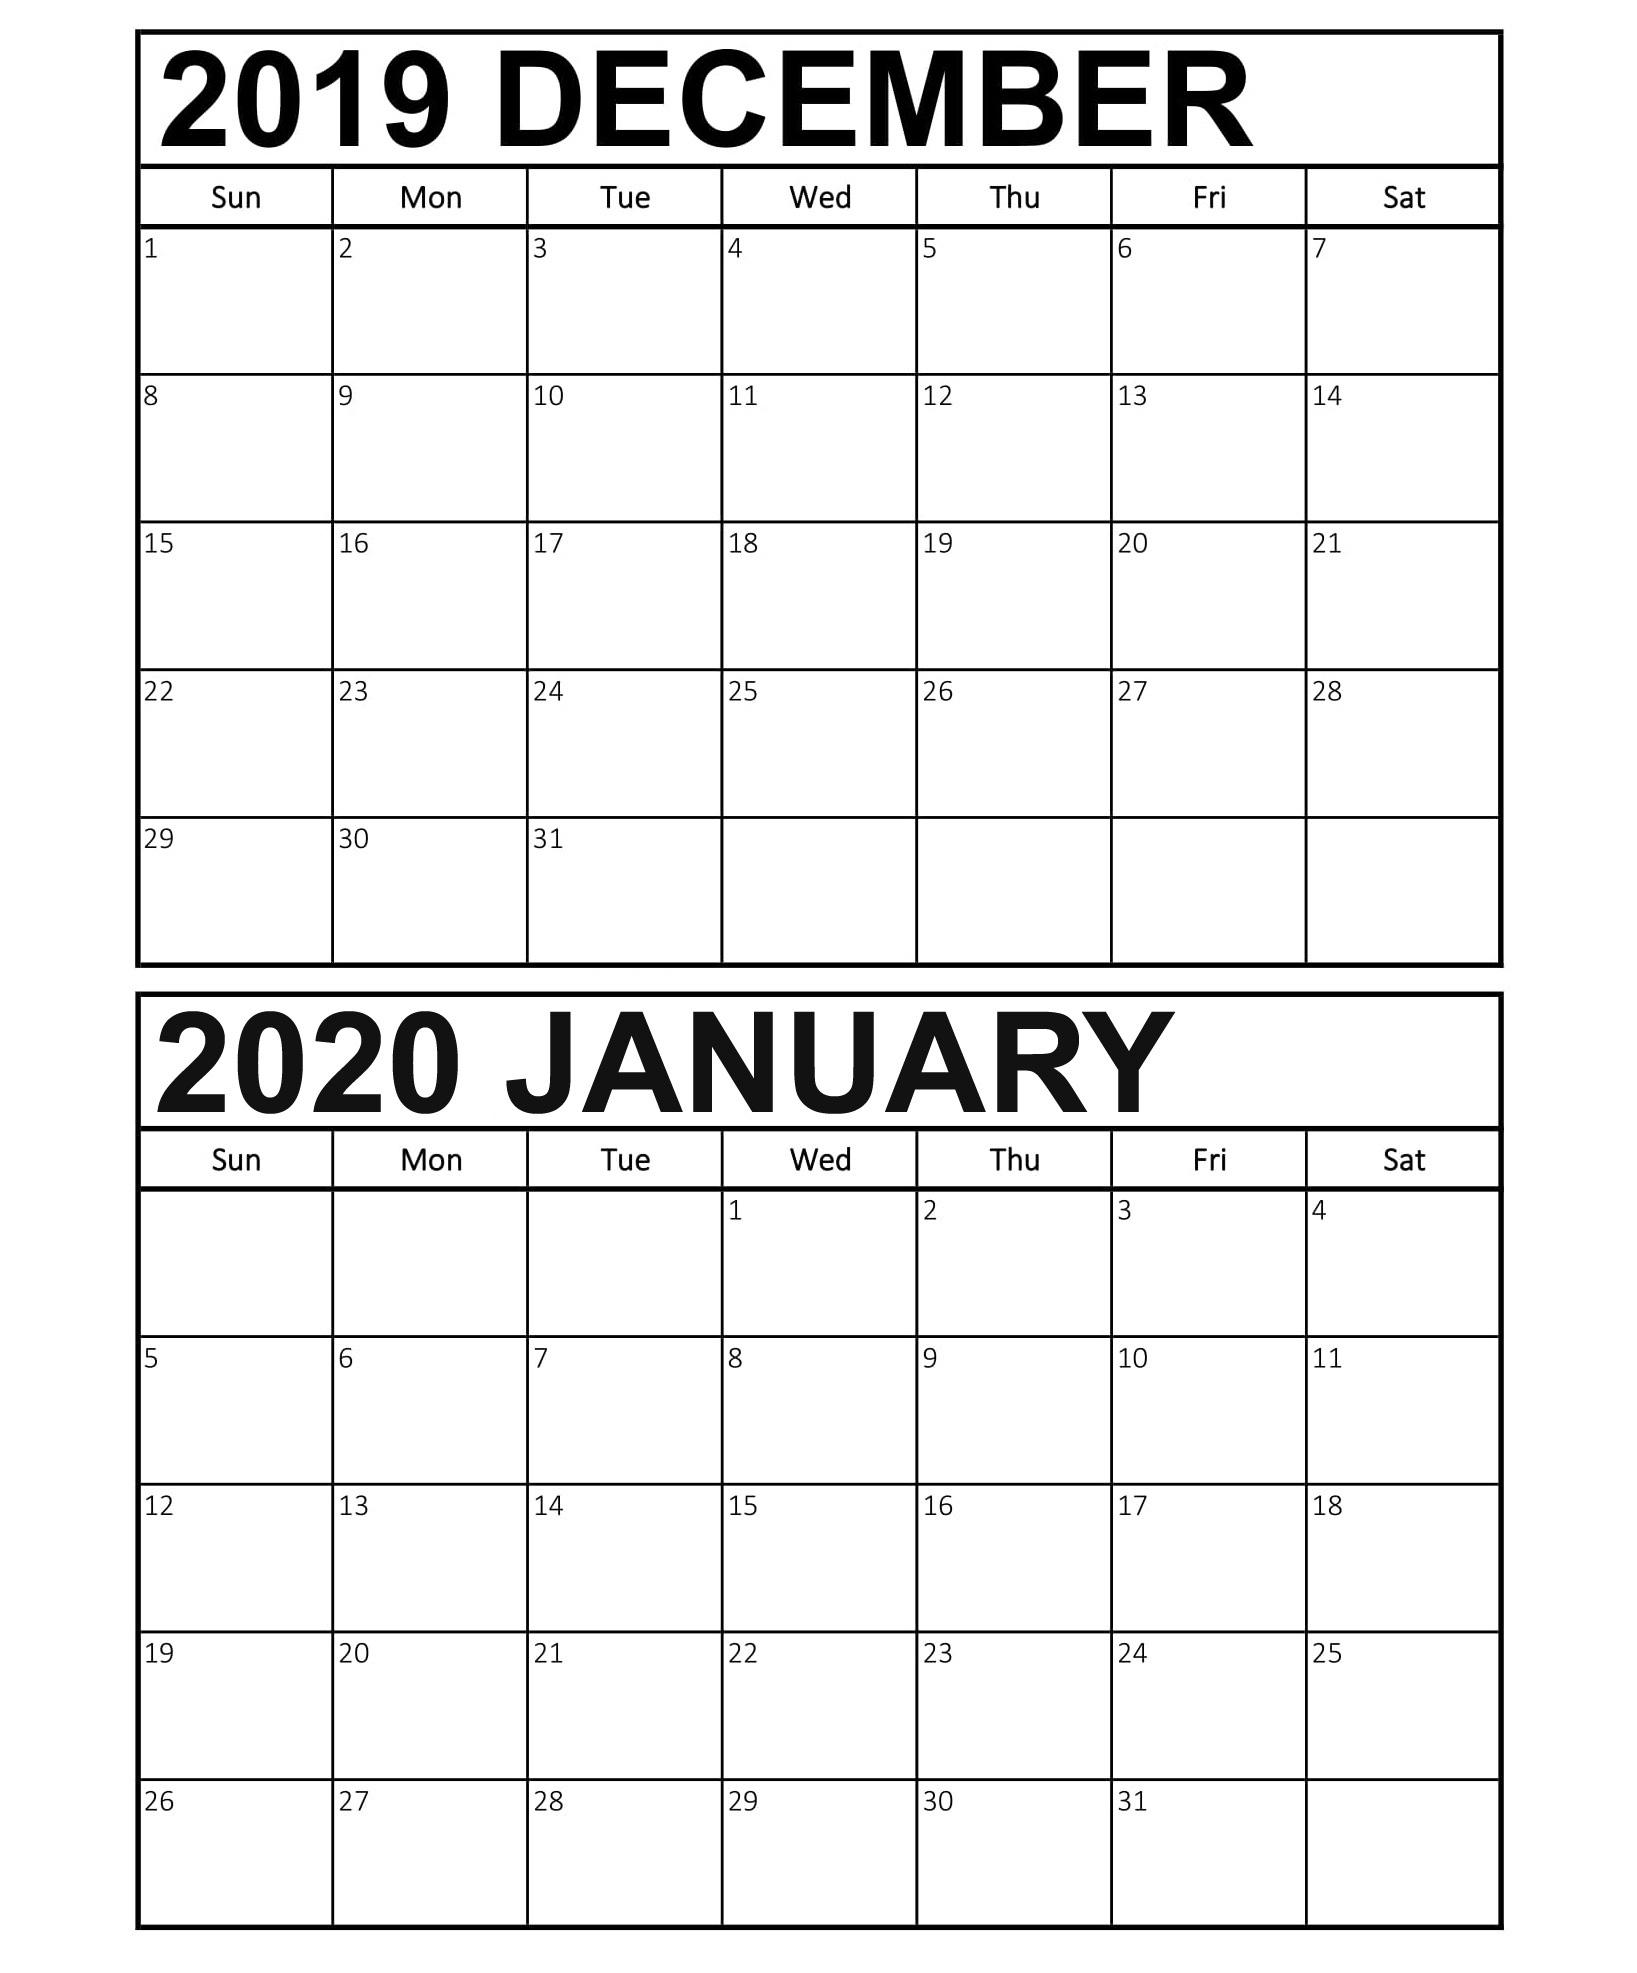 Print Calendar December 2020 And January 2020 | Calendar Printables Free Templates December 2020 Calendar In January 2021 Calendar